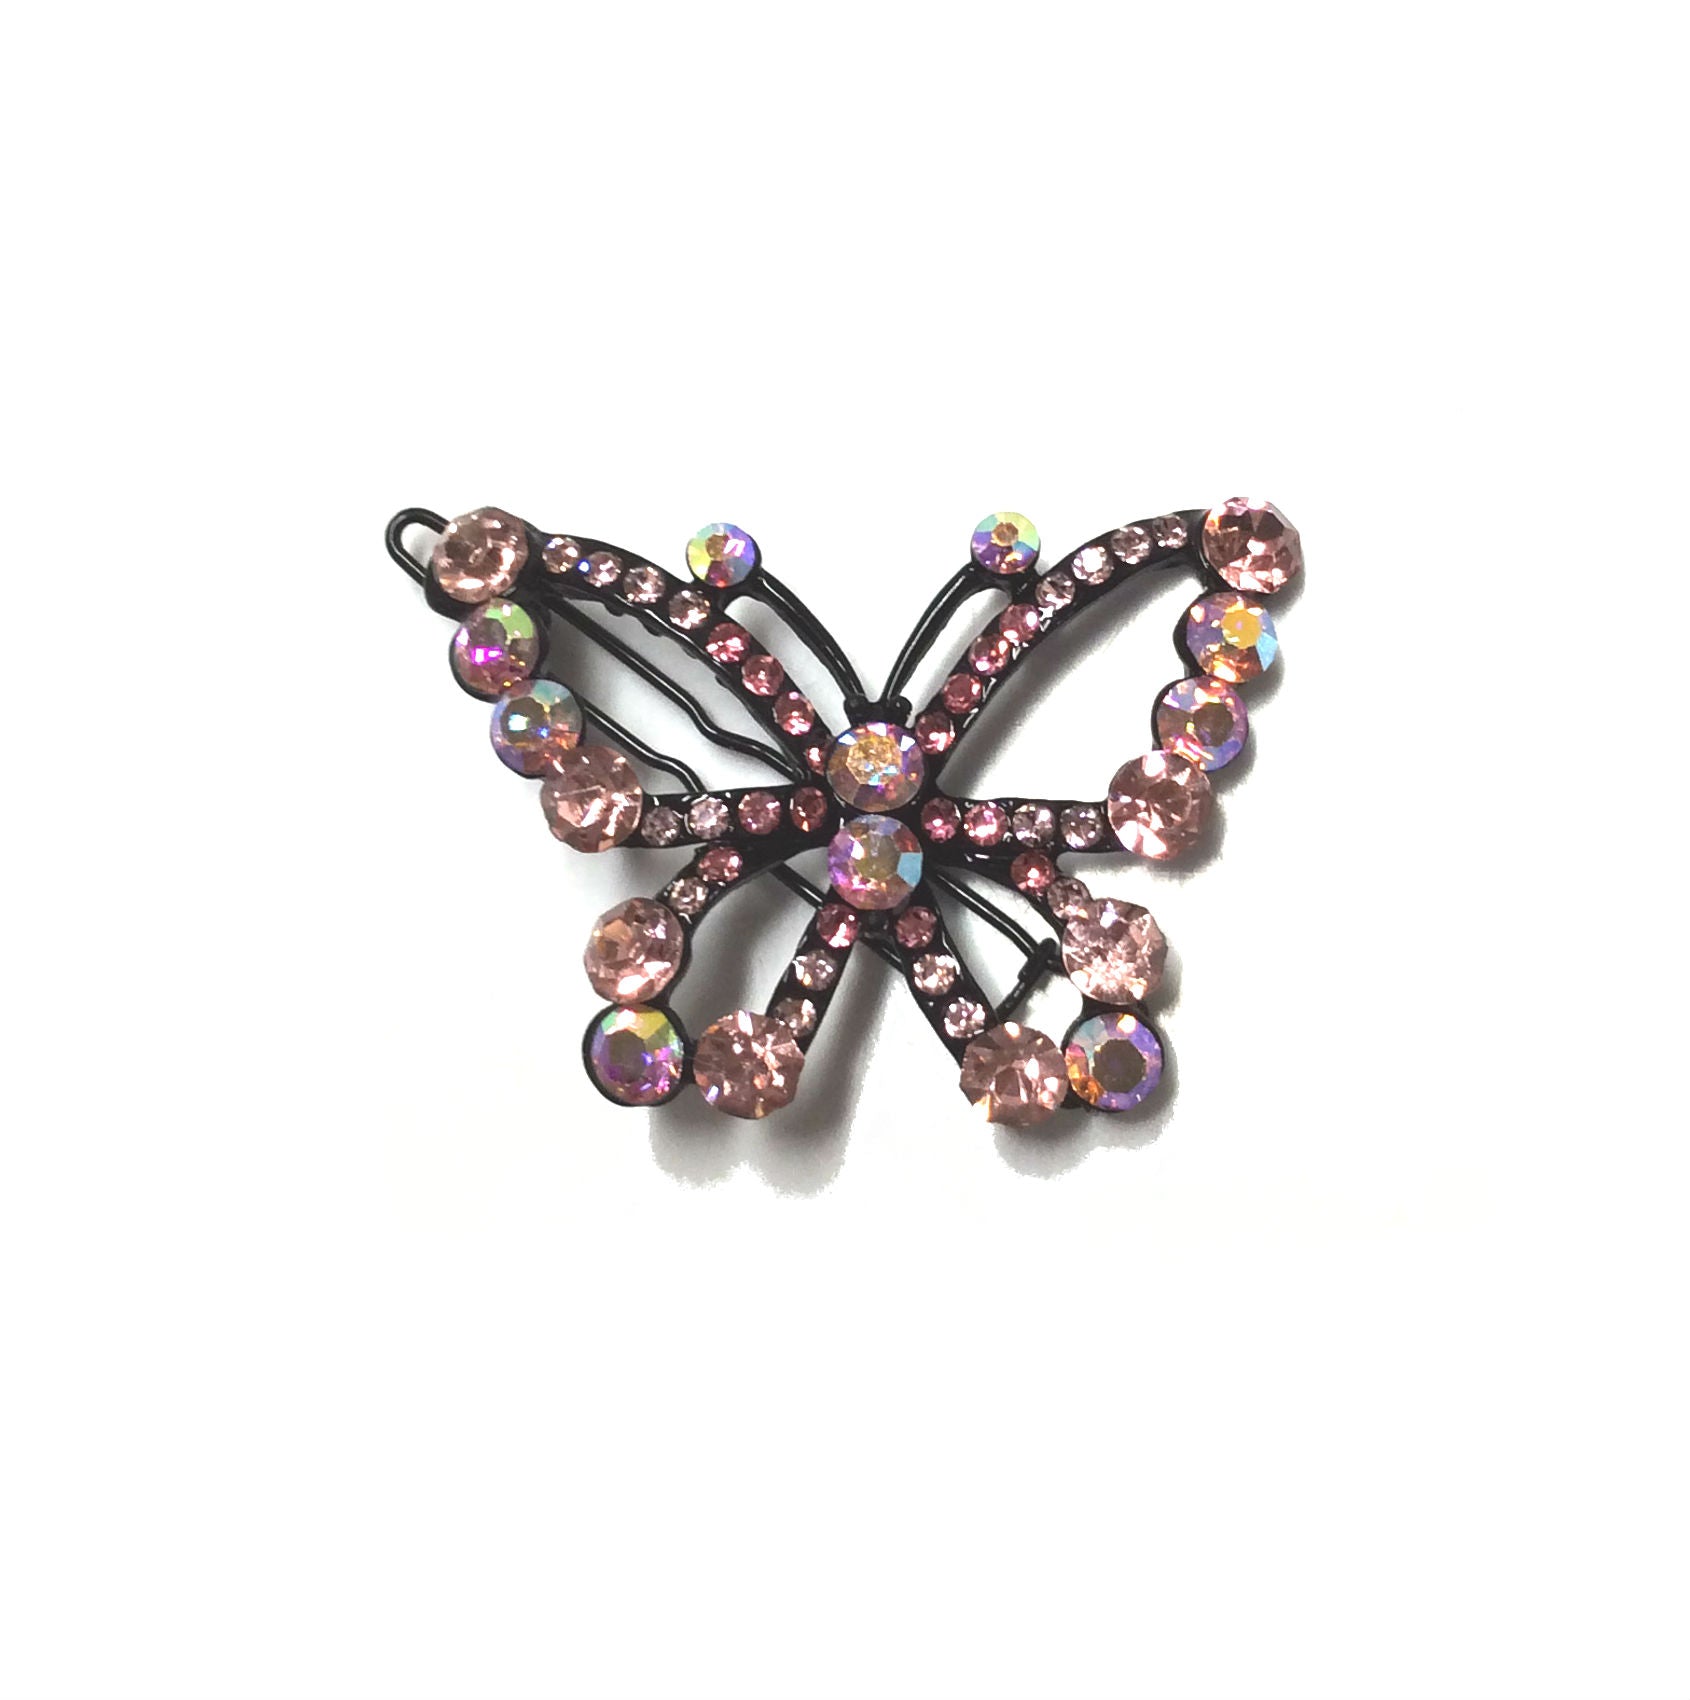 Butterfly Hair Pin #66-69107PK (Pink)